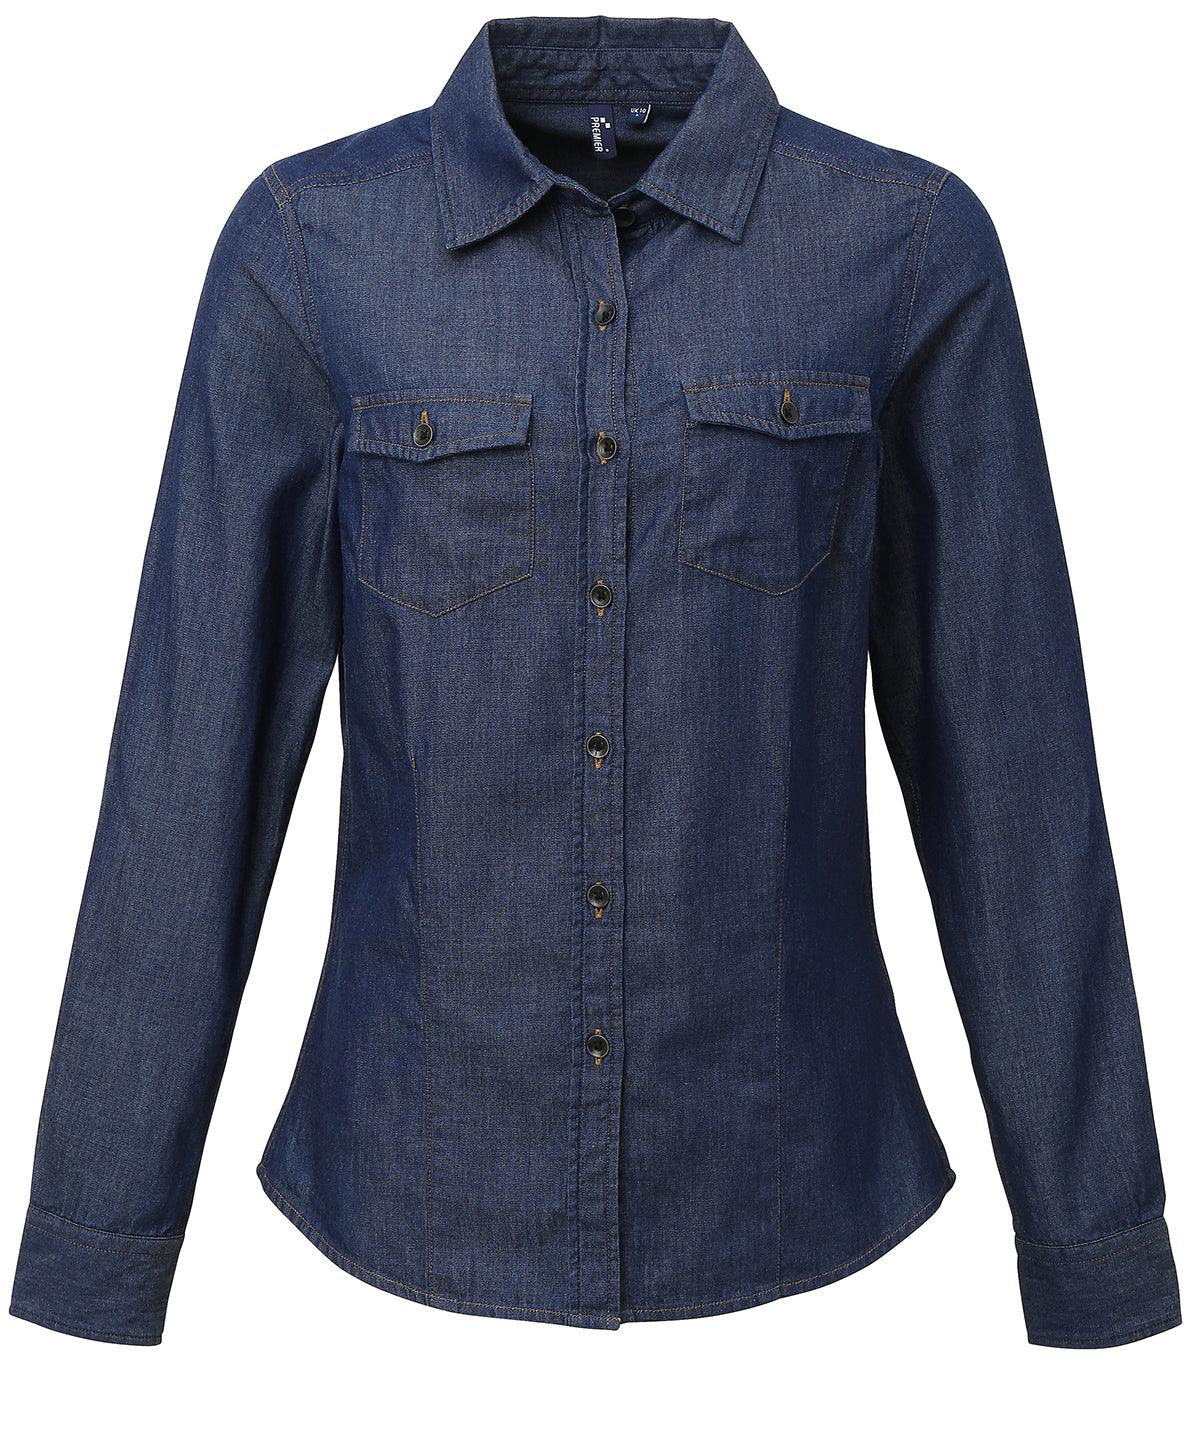 Women's jeans stitch denim shirt Shirts Schoolwear Centres denim, denim blouse, denim shirt Schoolwear Centres